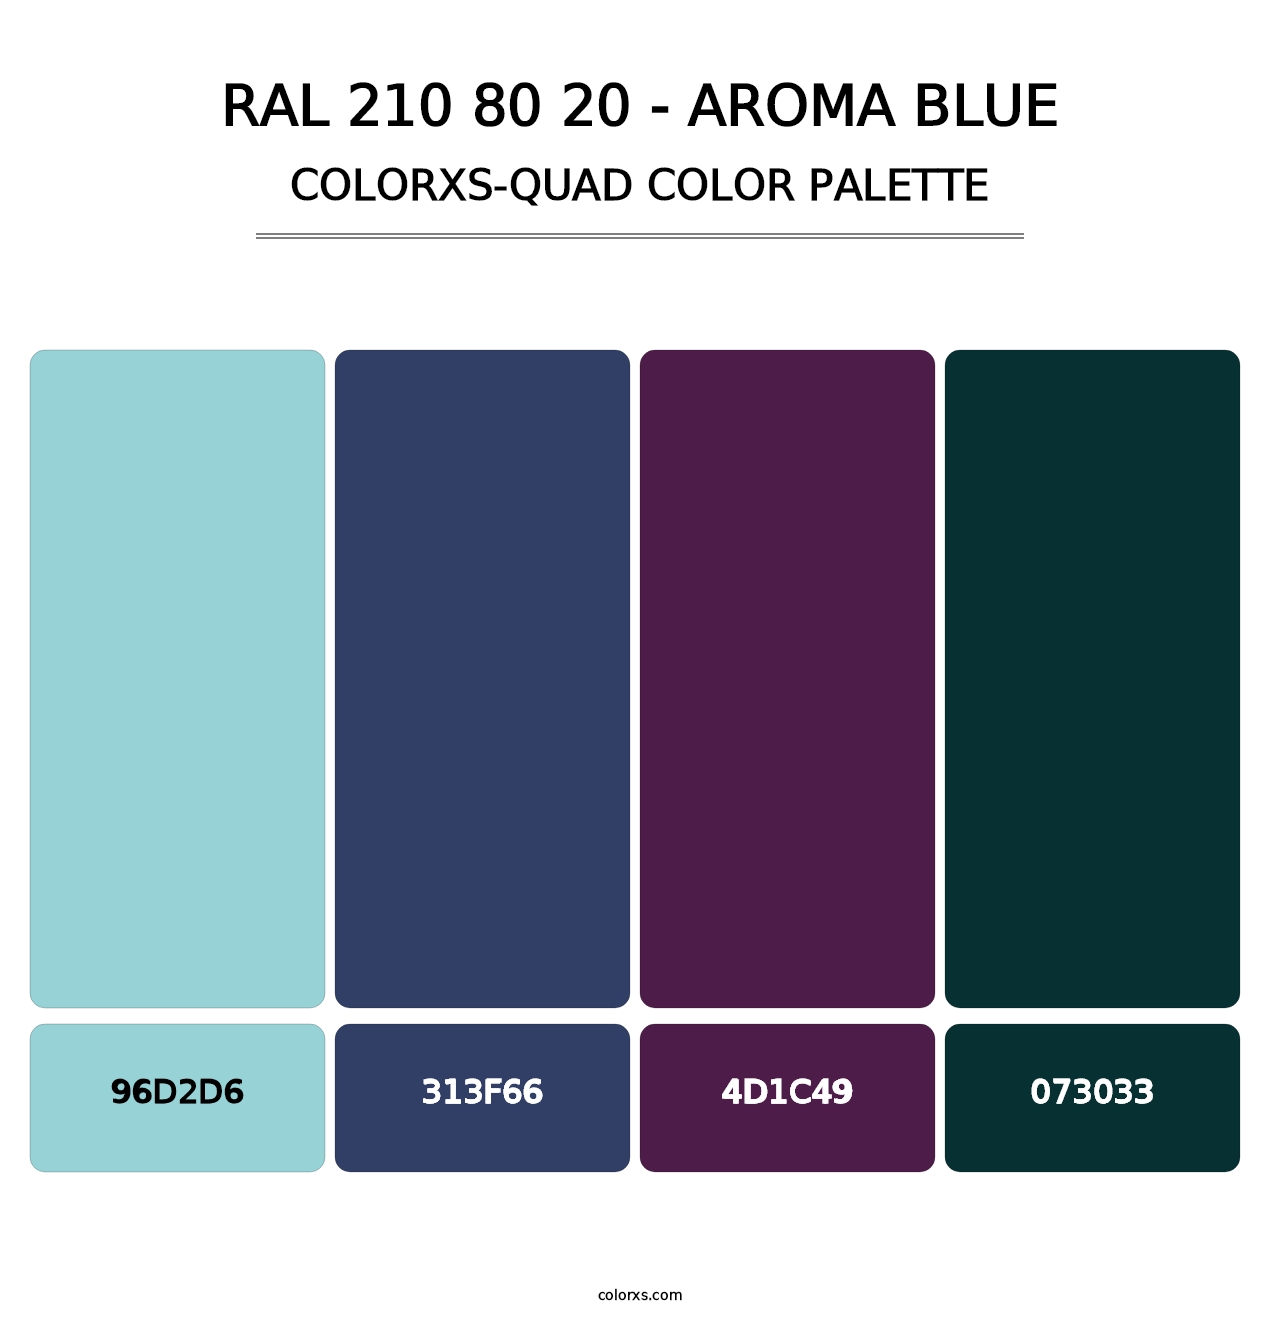 RAL 210 80 20 - Aroma Blue - Colorxs Quad Palette